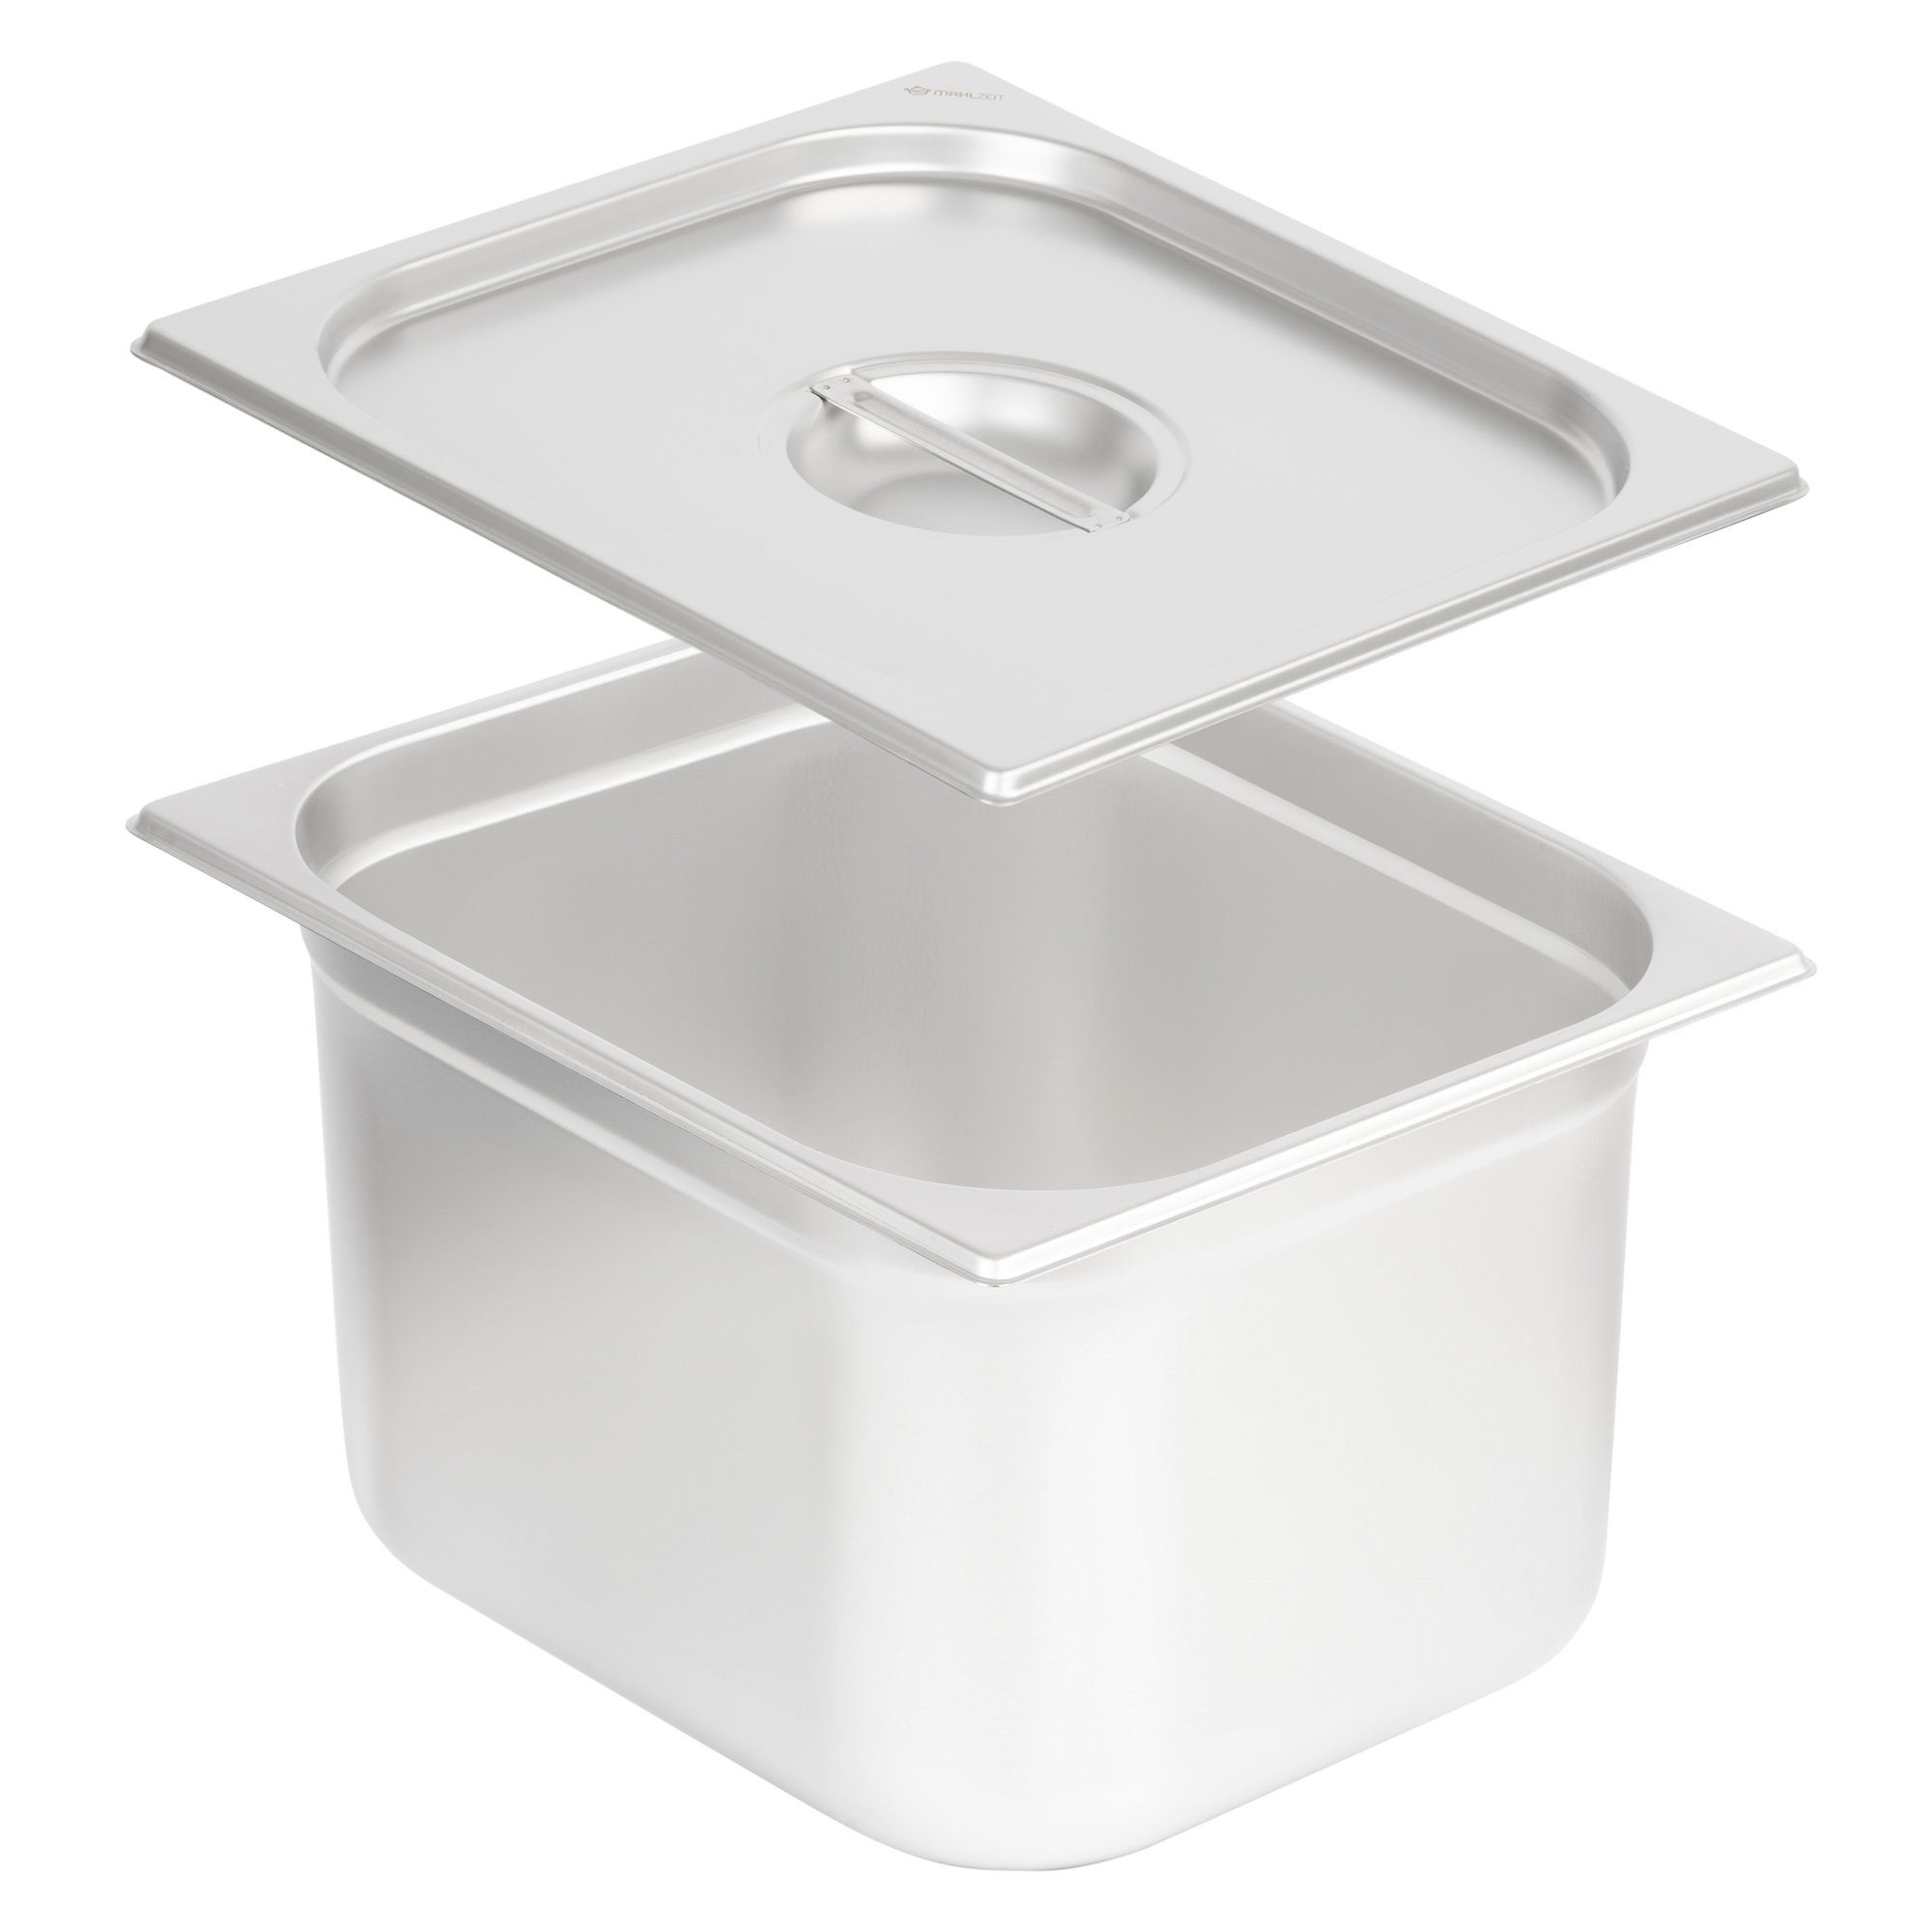 Mahlzeit Thermobehälter GN Behälter 2/3 mit Deckel, Höhe 200 mm, Edelstahl Wärmebehälter, Edelstahl, (Set, 2-tlg., 1x 2/3 GN Behälter mit Deckel(200 mm), für Chafing Dish